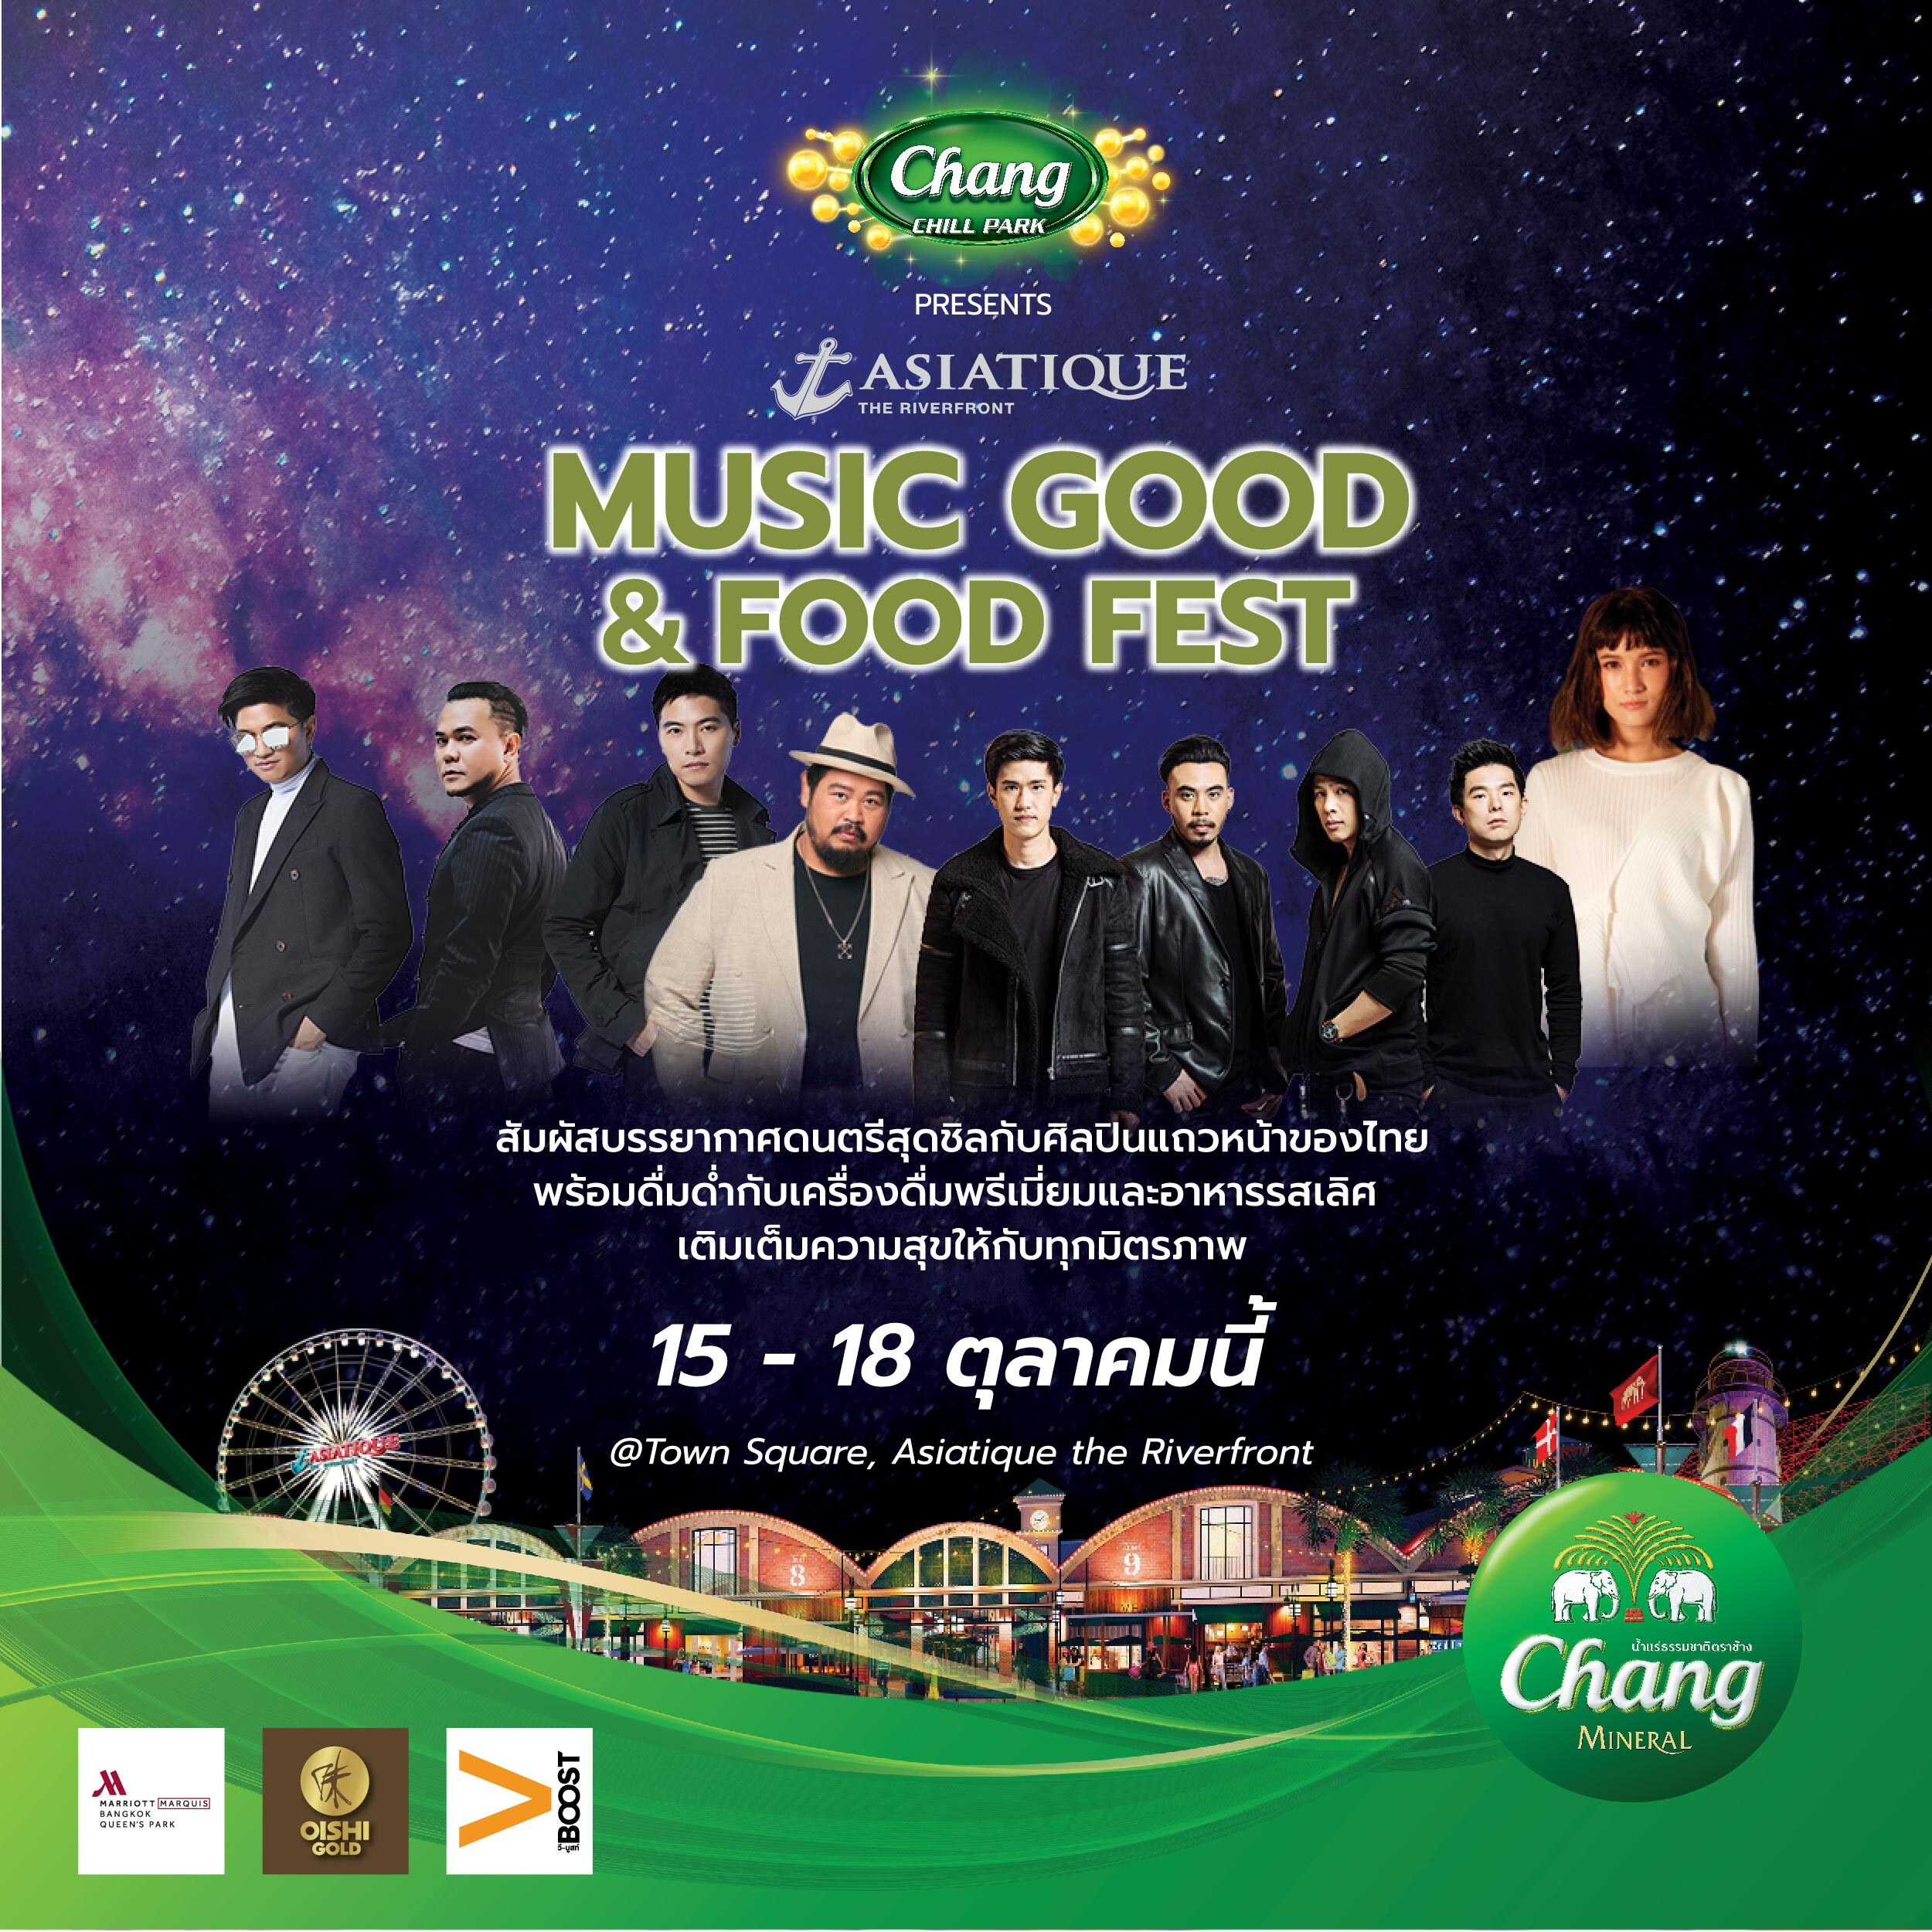 Chang Chill Park presents ASIATIQUE Music Good & Food Fest 15-18 ต.ค. นี้ ฟรี! คอนเสิร์ตสุดชิล 4 วัน 4 ศิลปิน